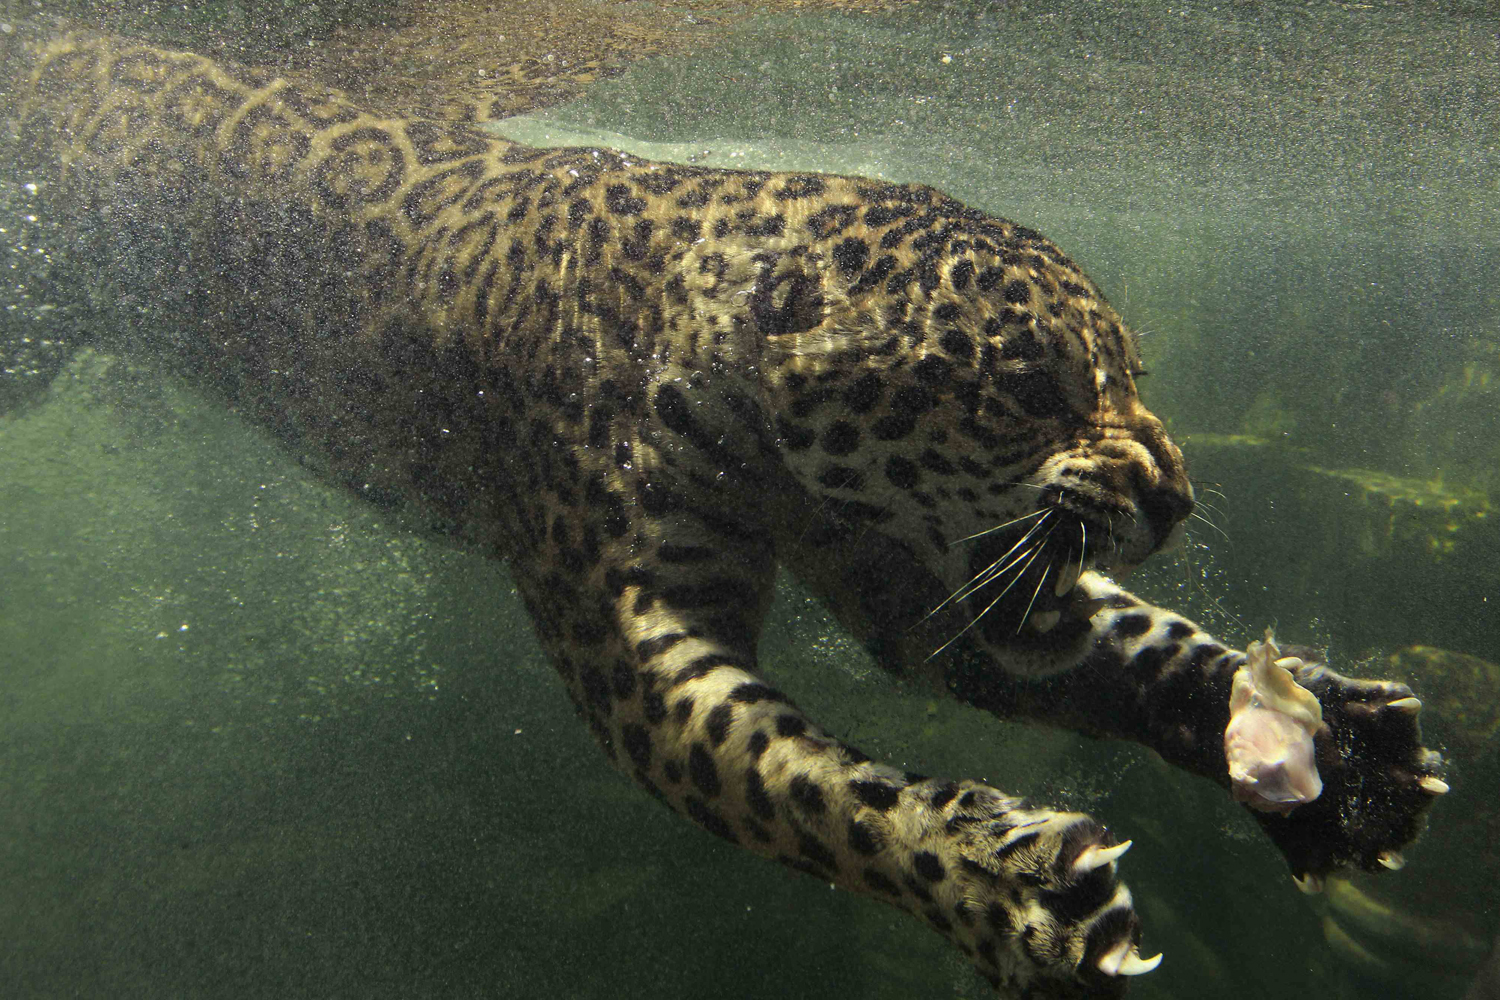 Image: Oct. 23, 2012. A jaguar swims towards in the water during feeding time at Taman Safari Indonesia in Bogor, Indonesia.